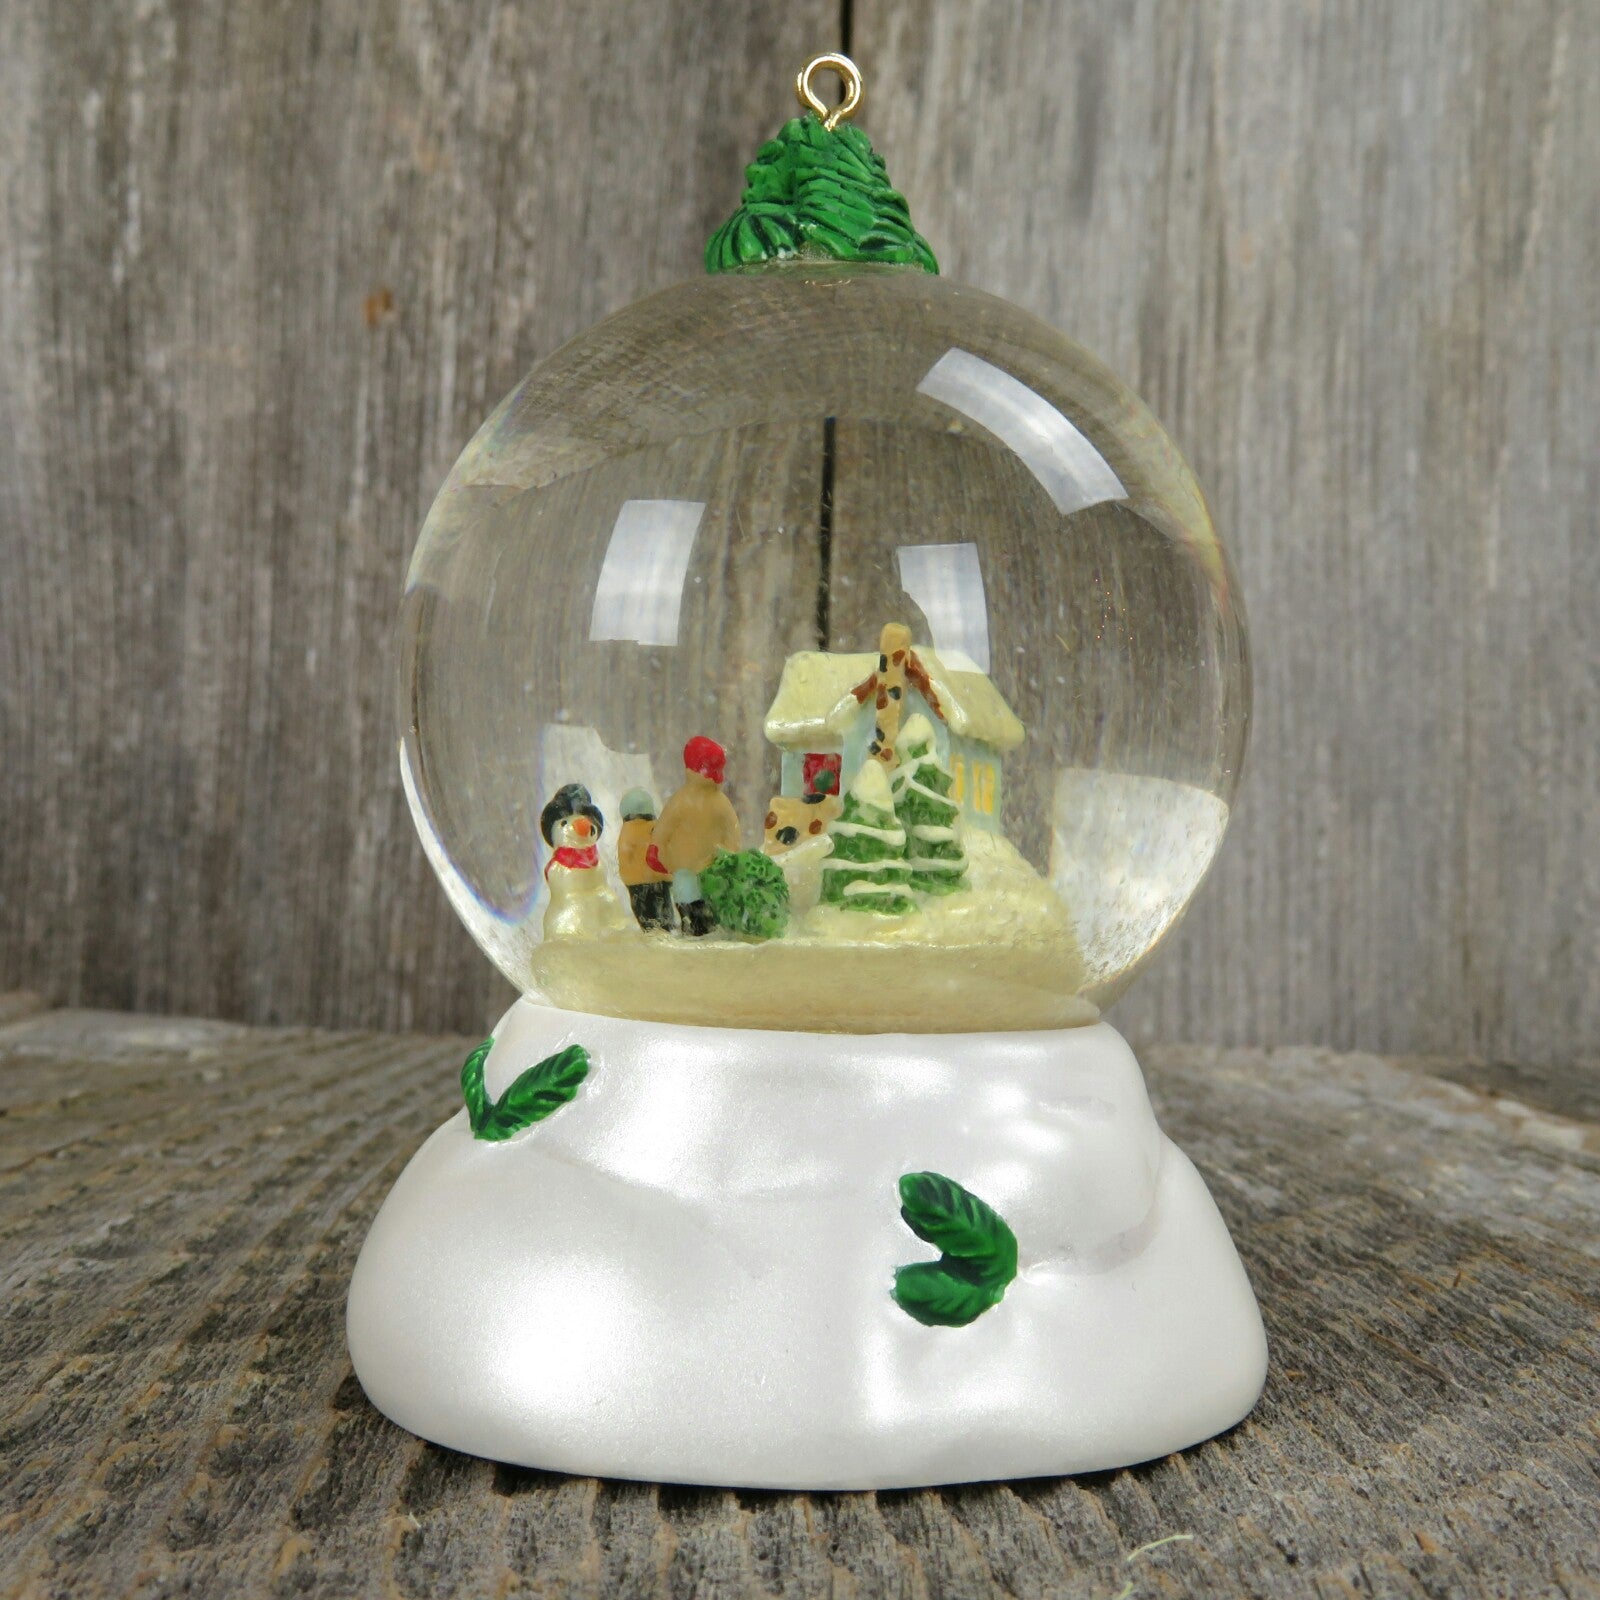 Snow Globe Hallmark Ornament Bringing Home The Tree Winter Wonderland 2002 - At Grandma's Table